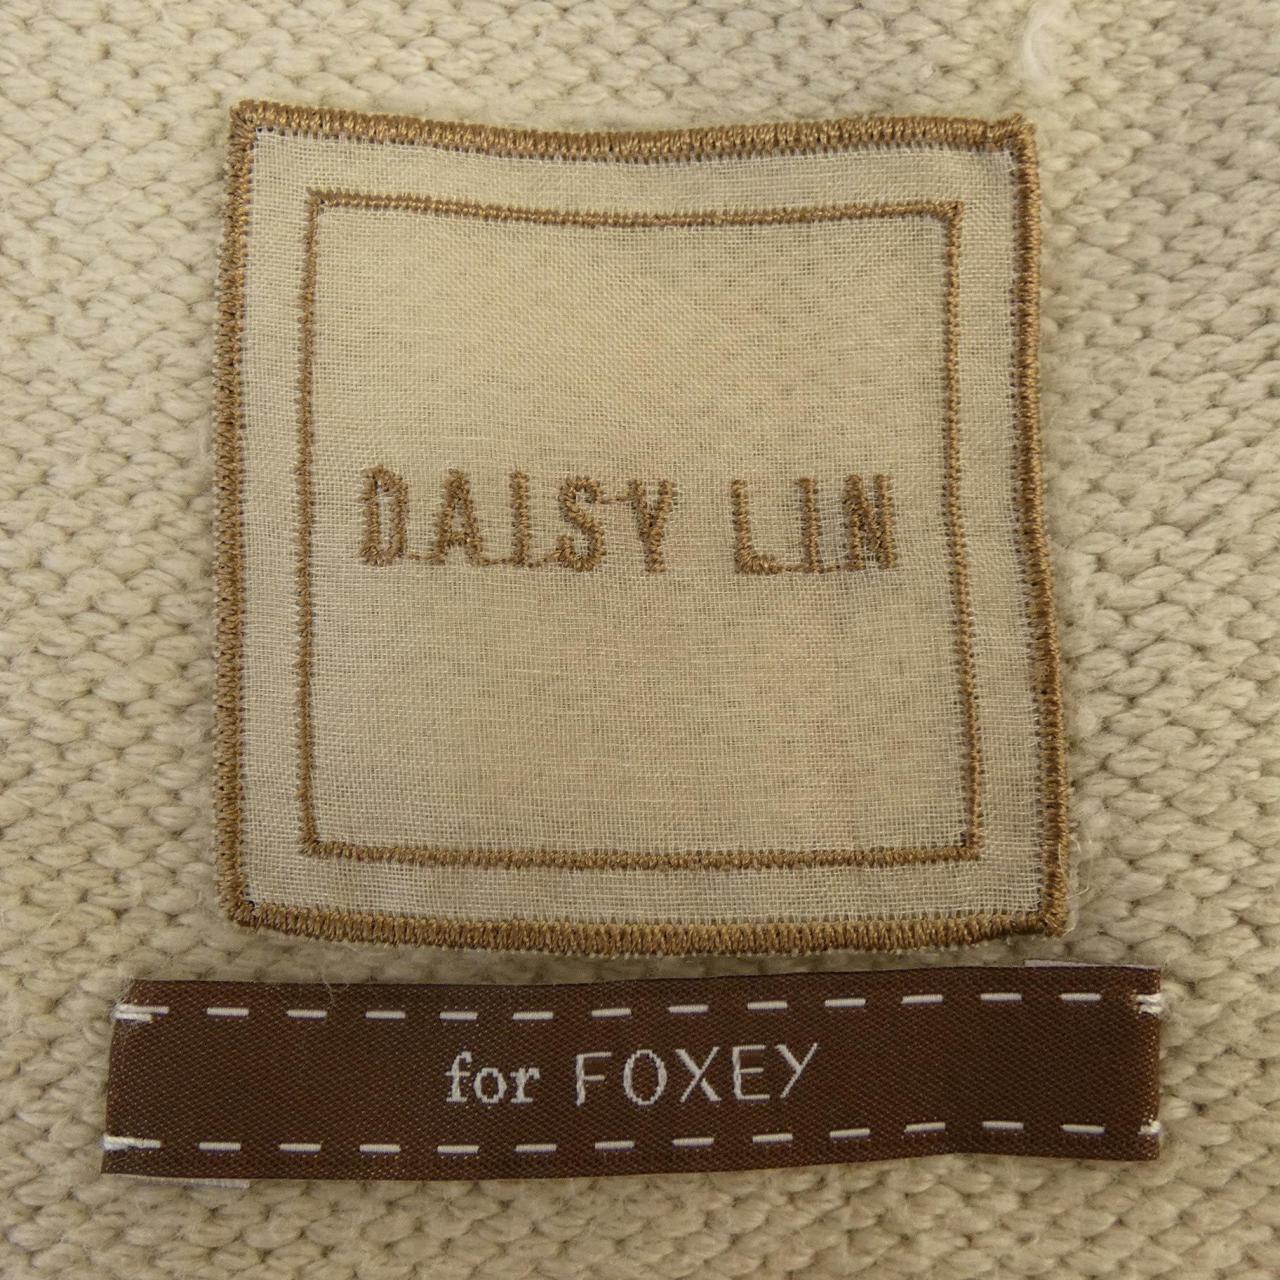 Daisy lin DAISY LIN cardigan